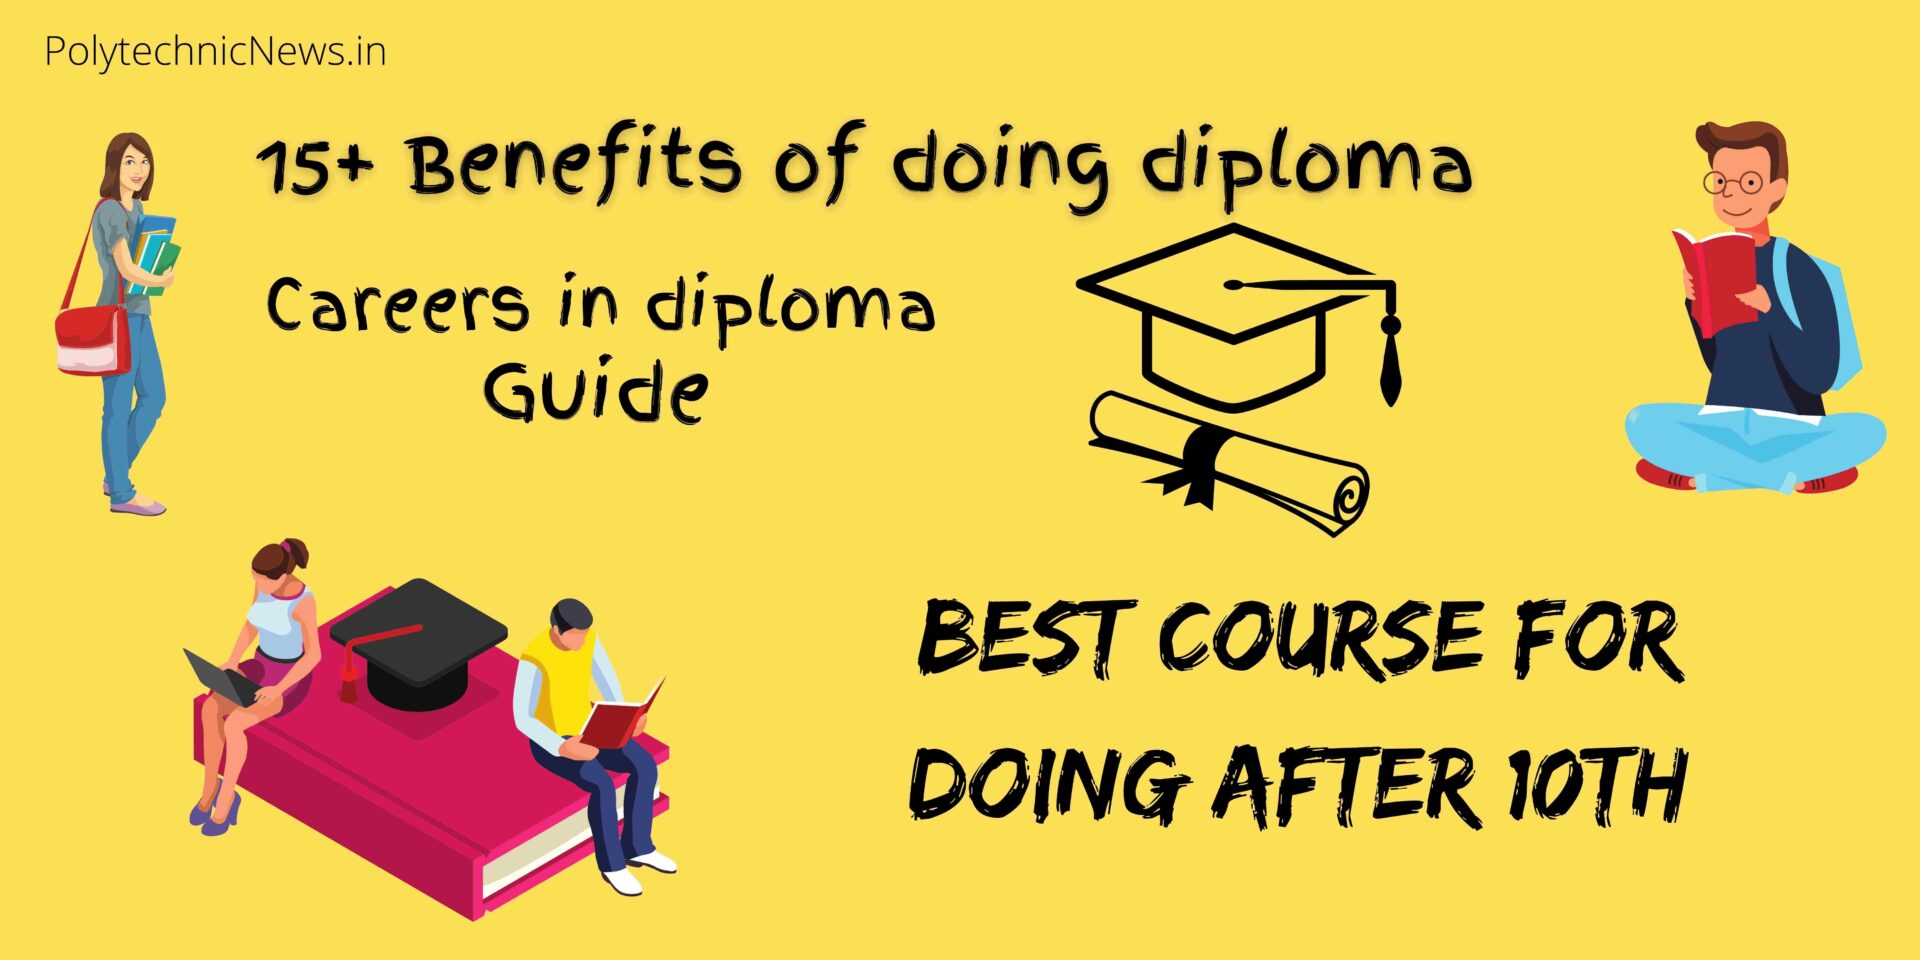 Benefits of doing diploma